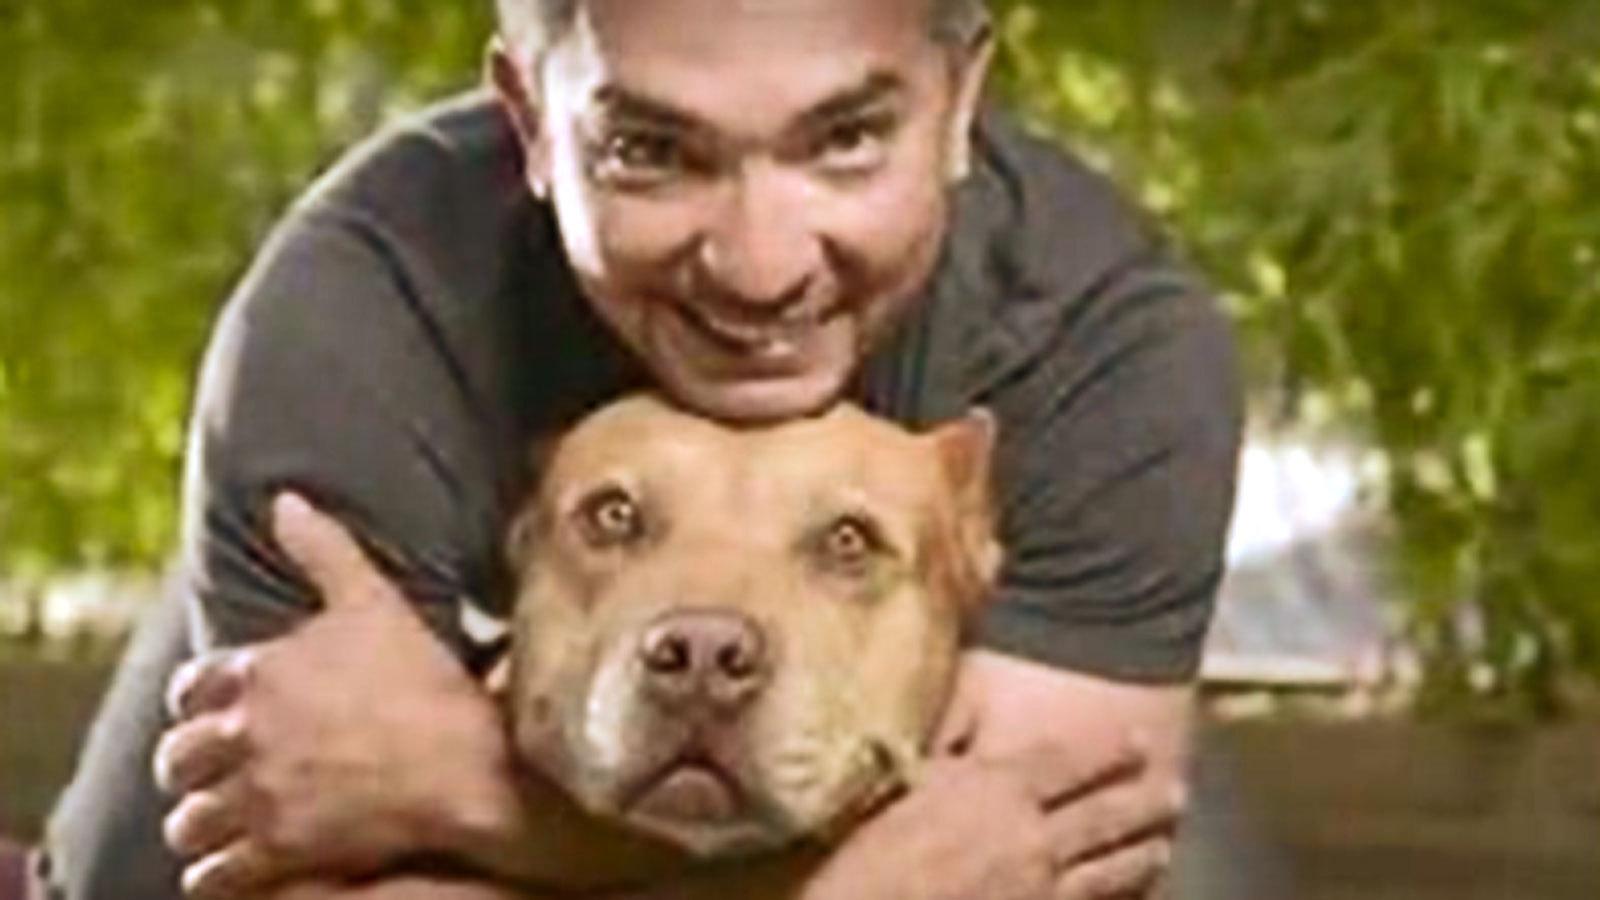 Dog Whisperer' Cesar Millan sued in pit bull attack news